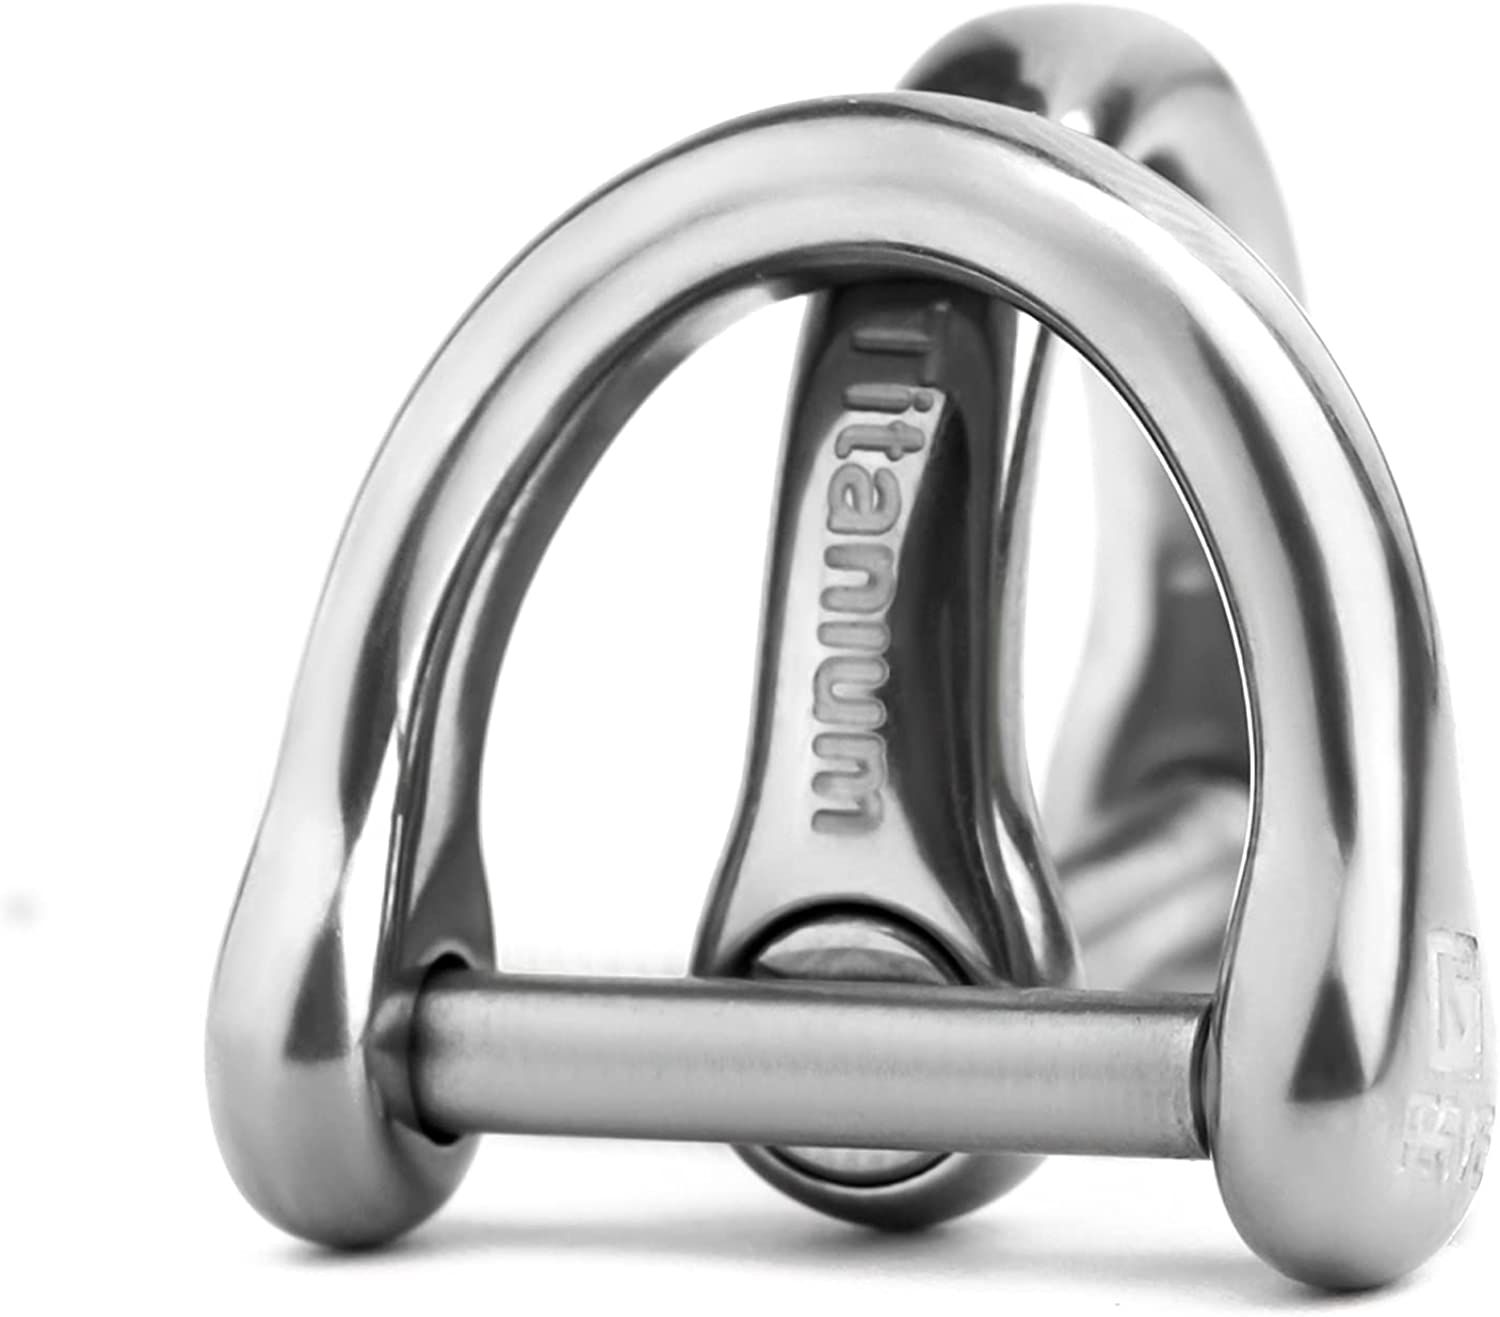 EXCEART 50pcs Key Ring Key Holder Keychain Key Chain Rings for Crafts  Keyrings Bulk Split Rings for Jewelry Making Retro Keyrings Stainless Steel